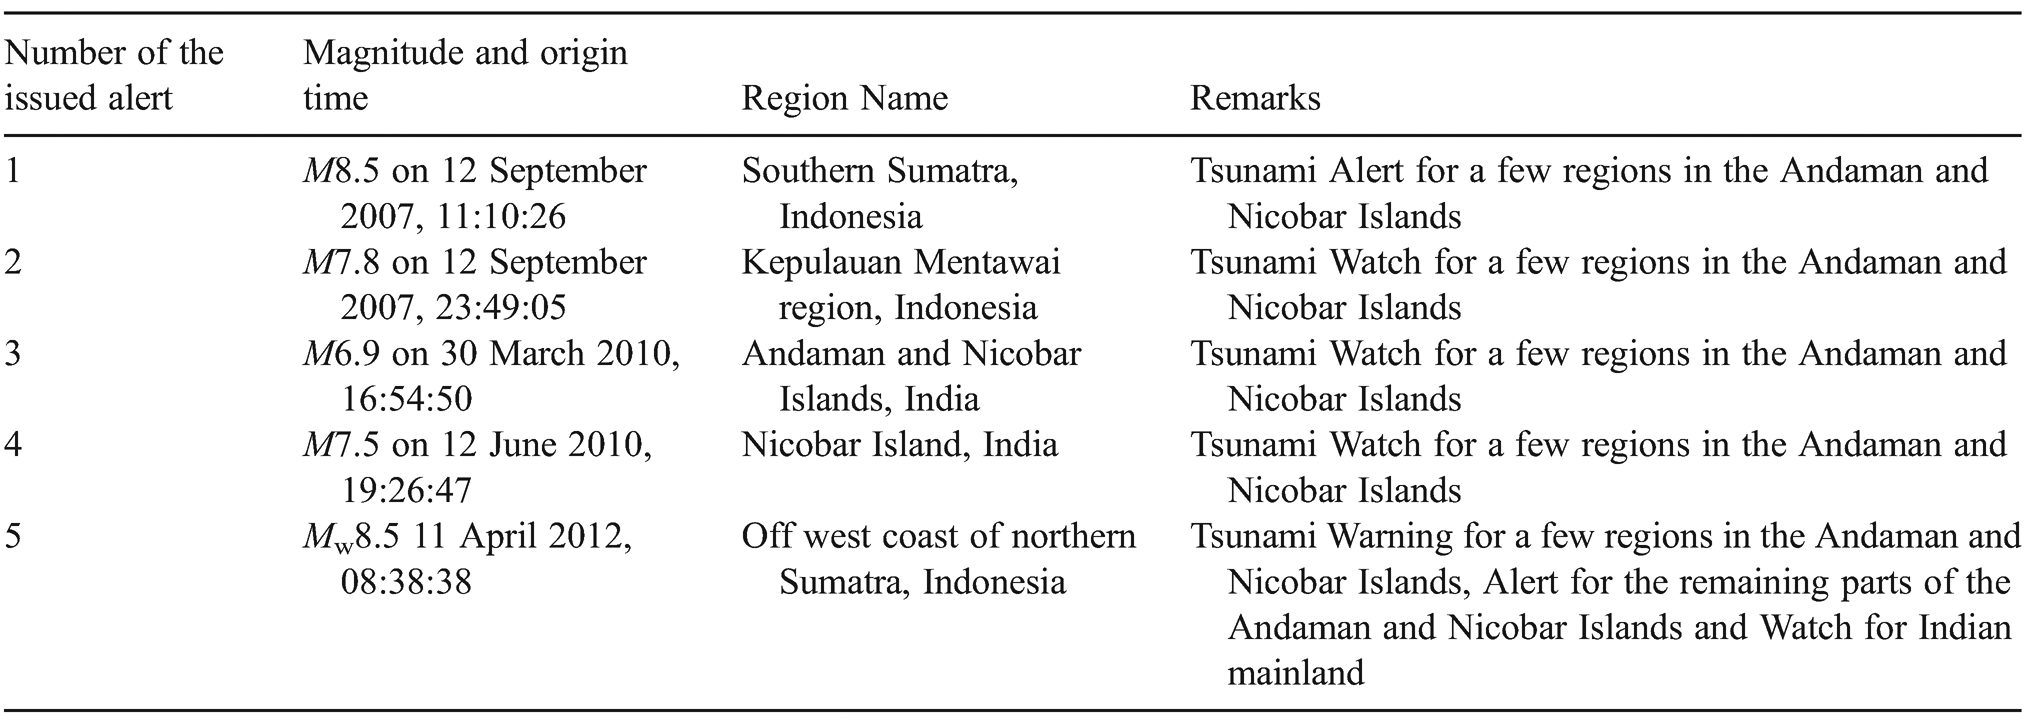 India S Tsunami Warning System Chapter 25 Extreme Natural Hazards Disaster Risks And Societal Implications